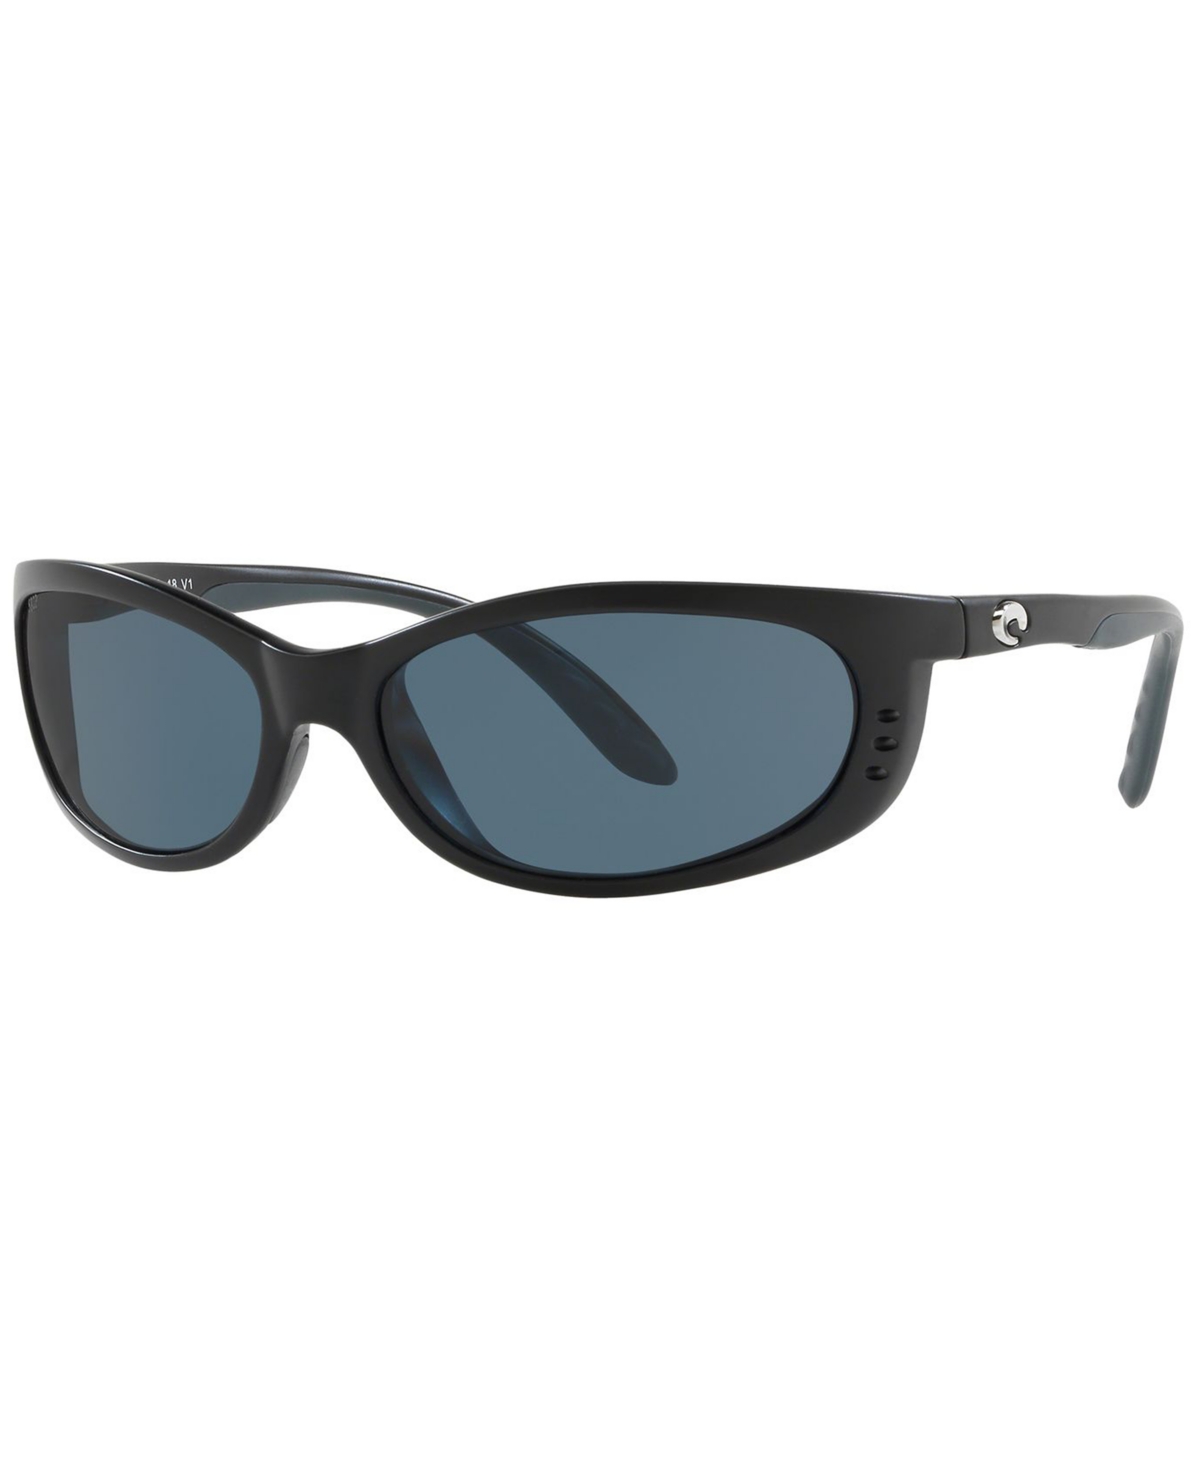 Polarized Sunglasses, Fathomp - Matte Black/P Grey